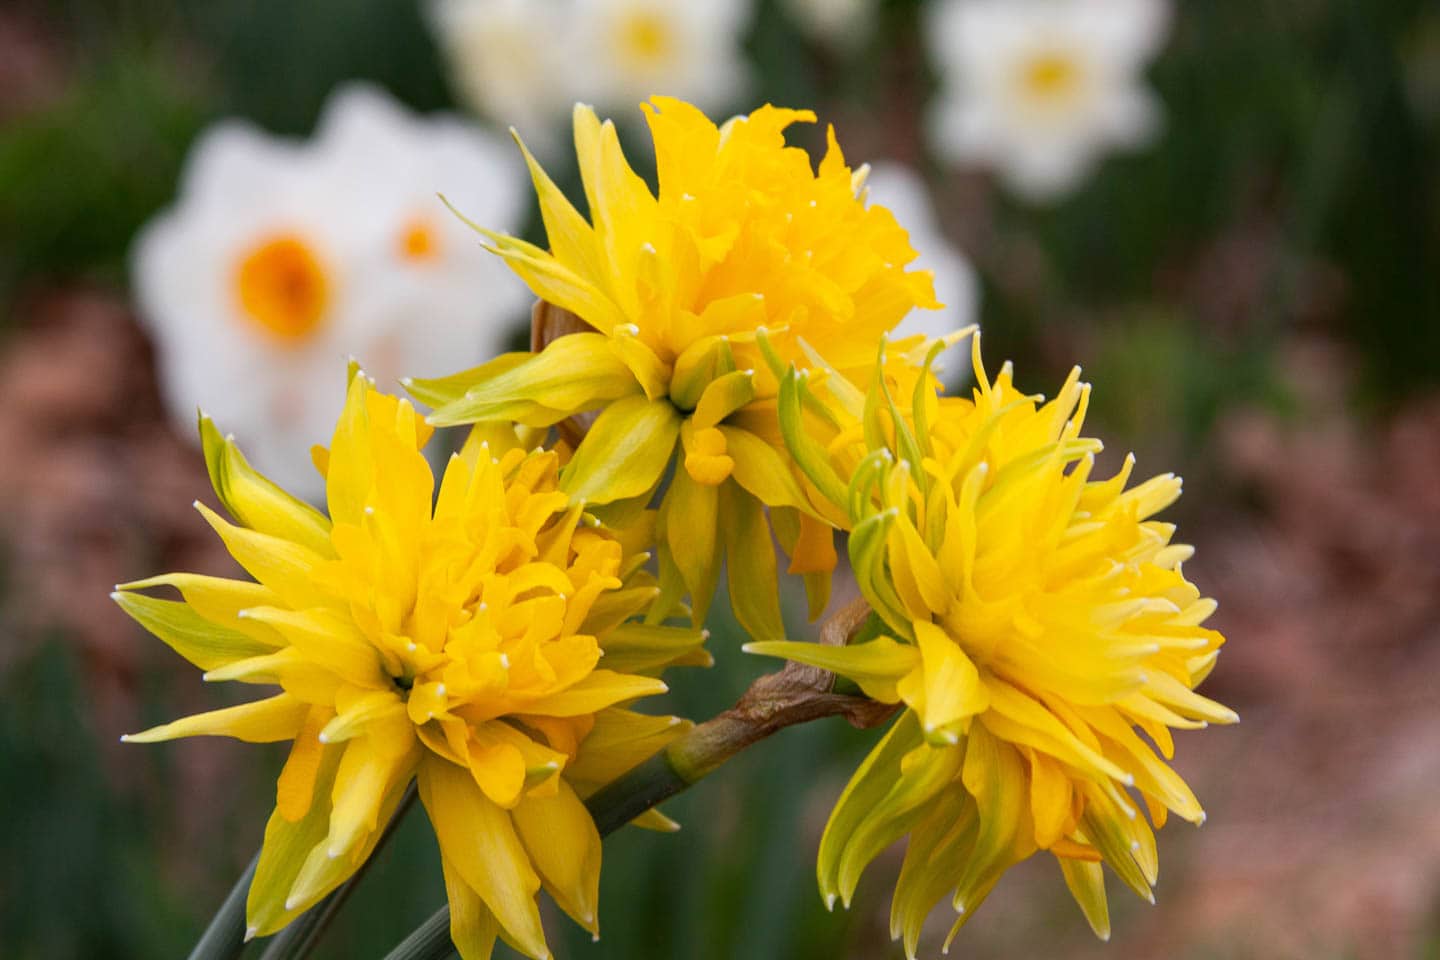 'Rip van Winkle' daffodil with three blooms